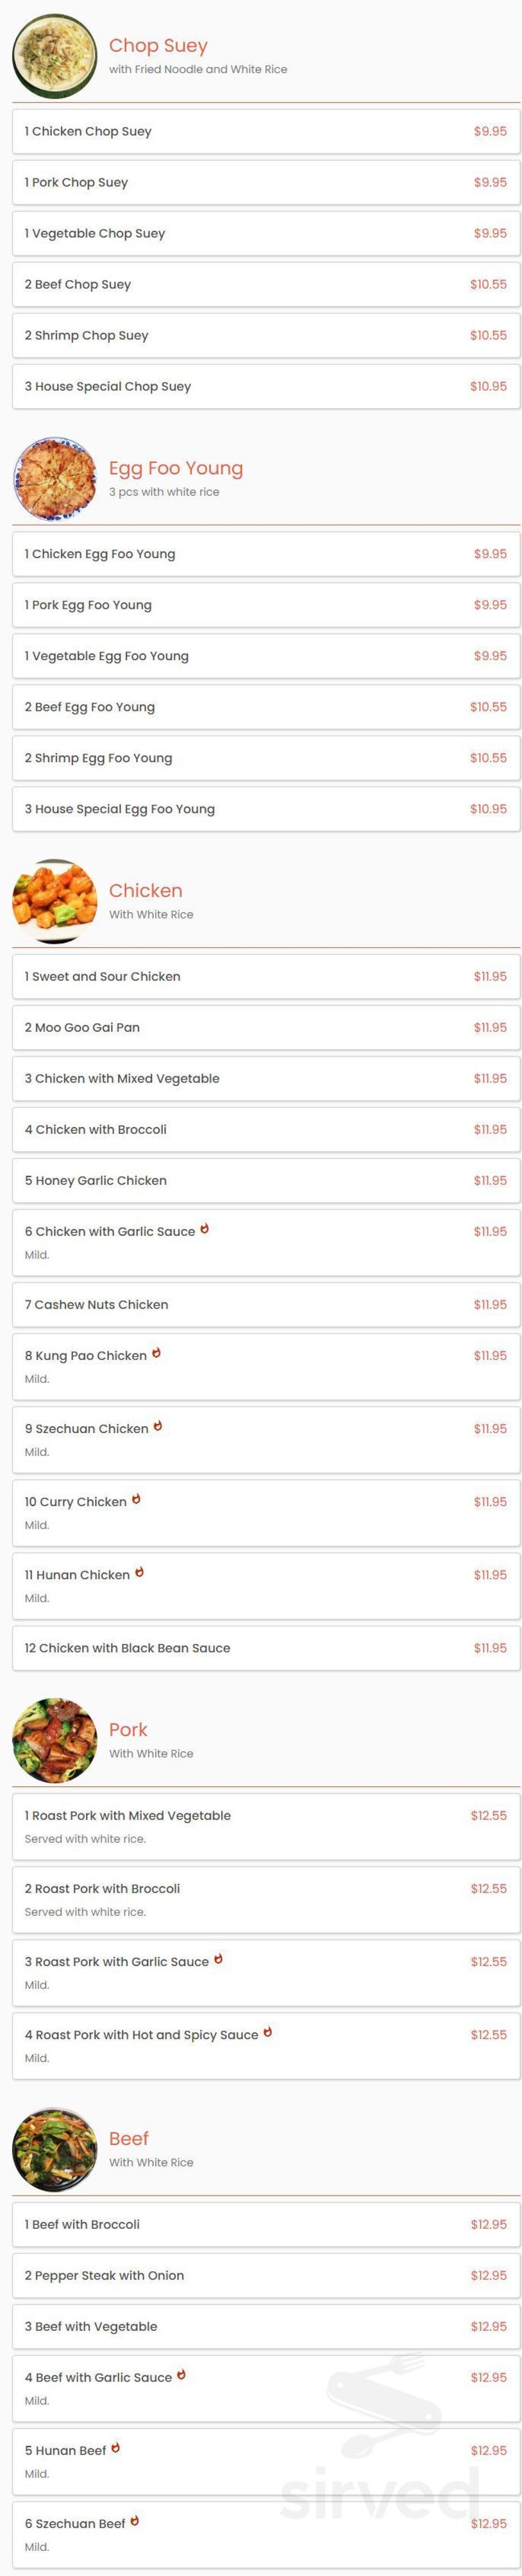 Picture of: Ming Wah Chinese Restaurant menu in Tamarac, Florida, USA